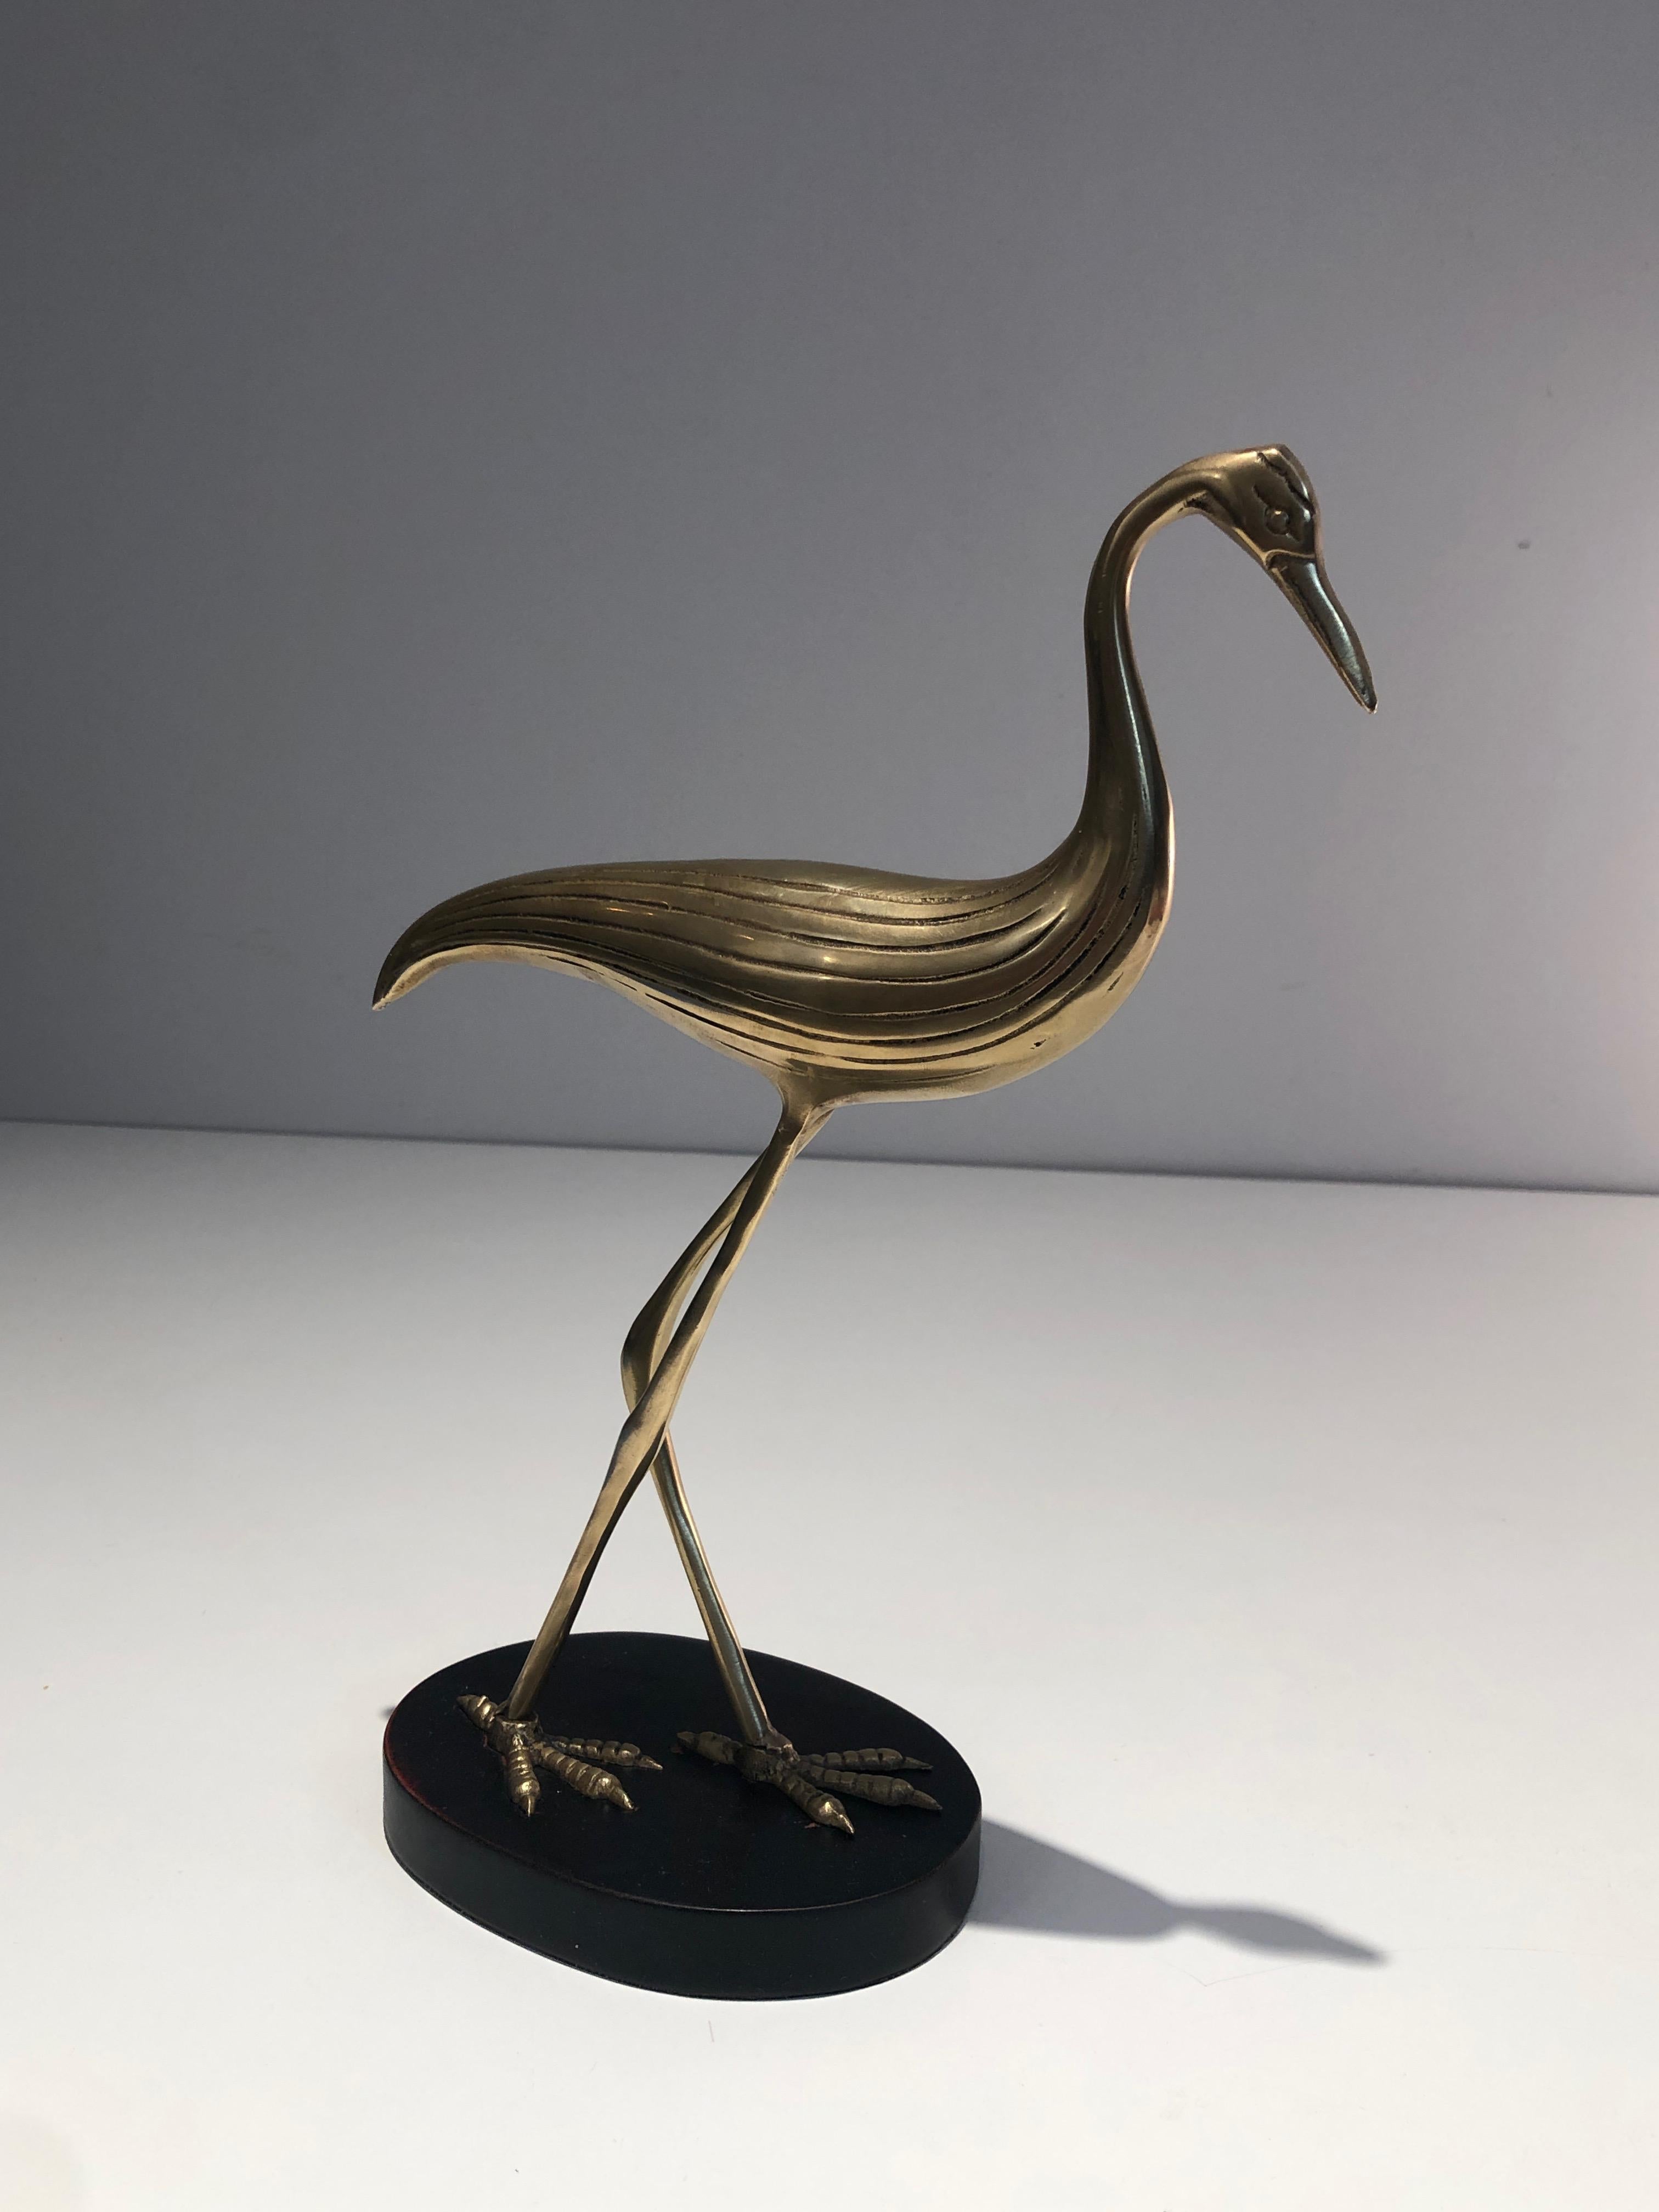 Stylish Brass Bird on a Blackened Base, French Work, Circa 1970 For Sale 5